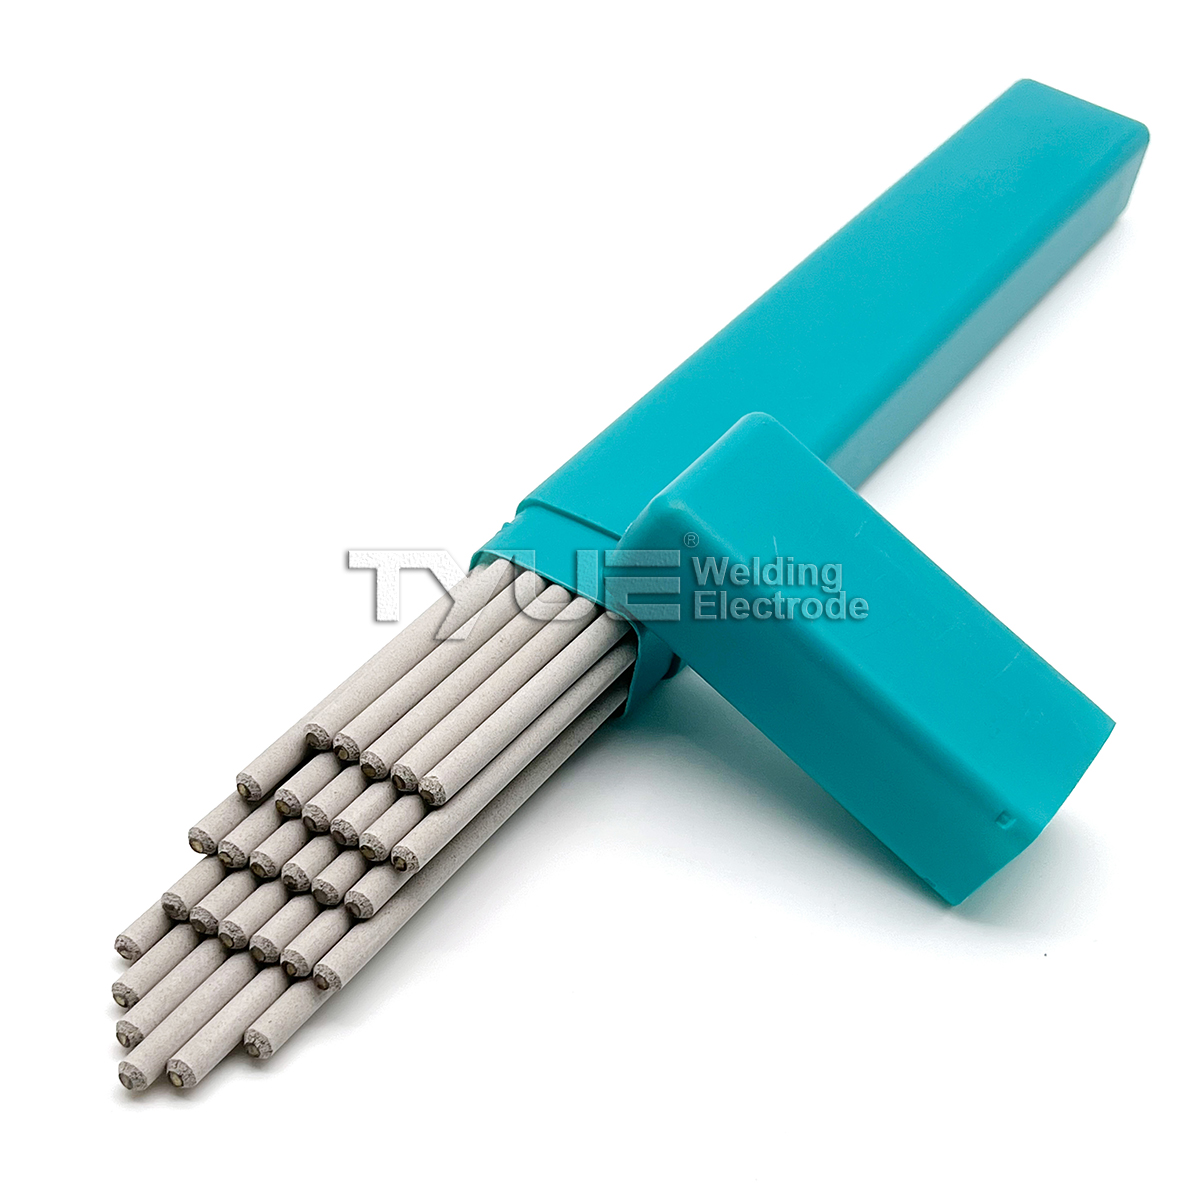 Bakin Karfe Welding Electrode AWS A5.4 E2553-16 Stick Electrodes tare da Titanium-Calcium Coating